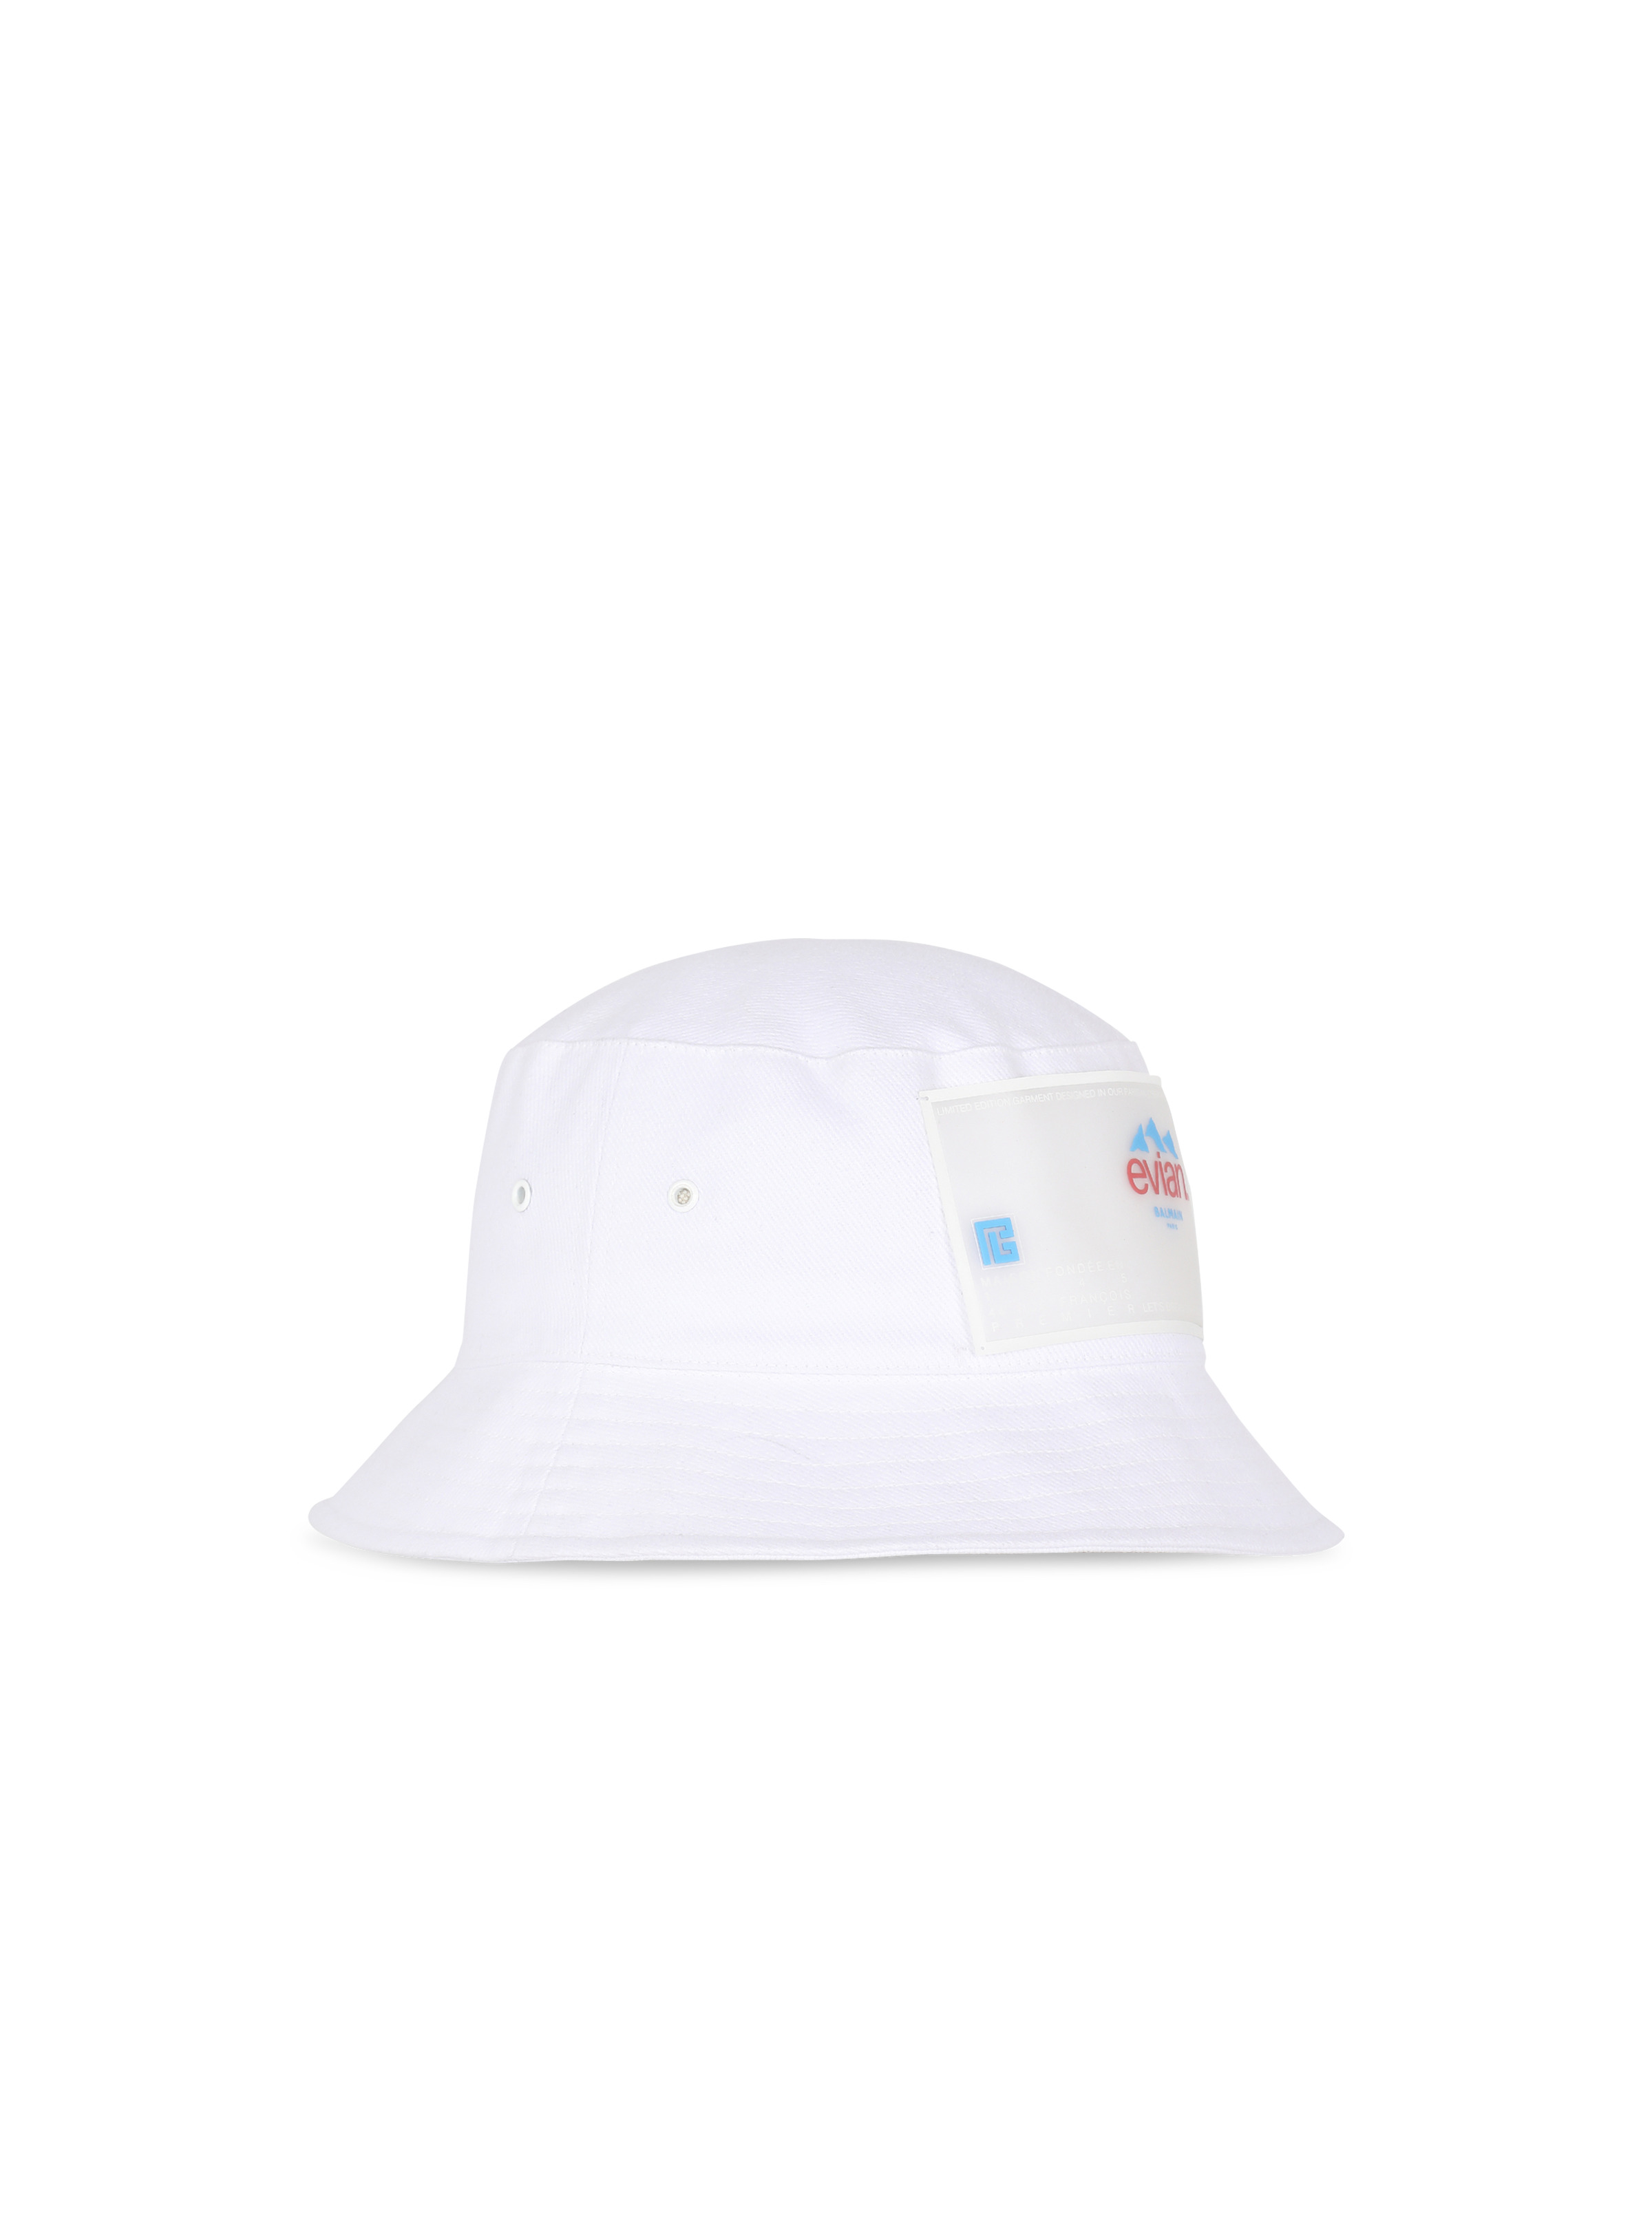 Balmain x Evian - Bucket hat - 3